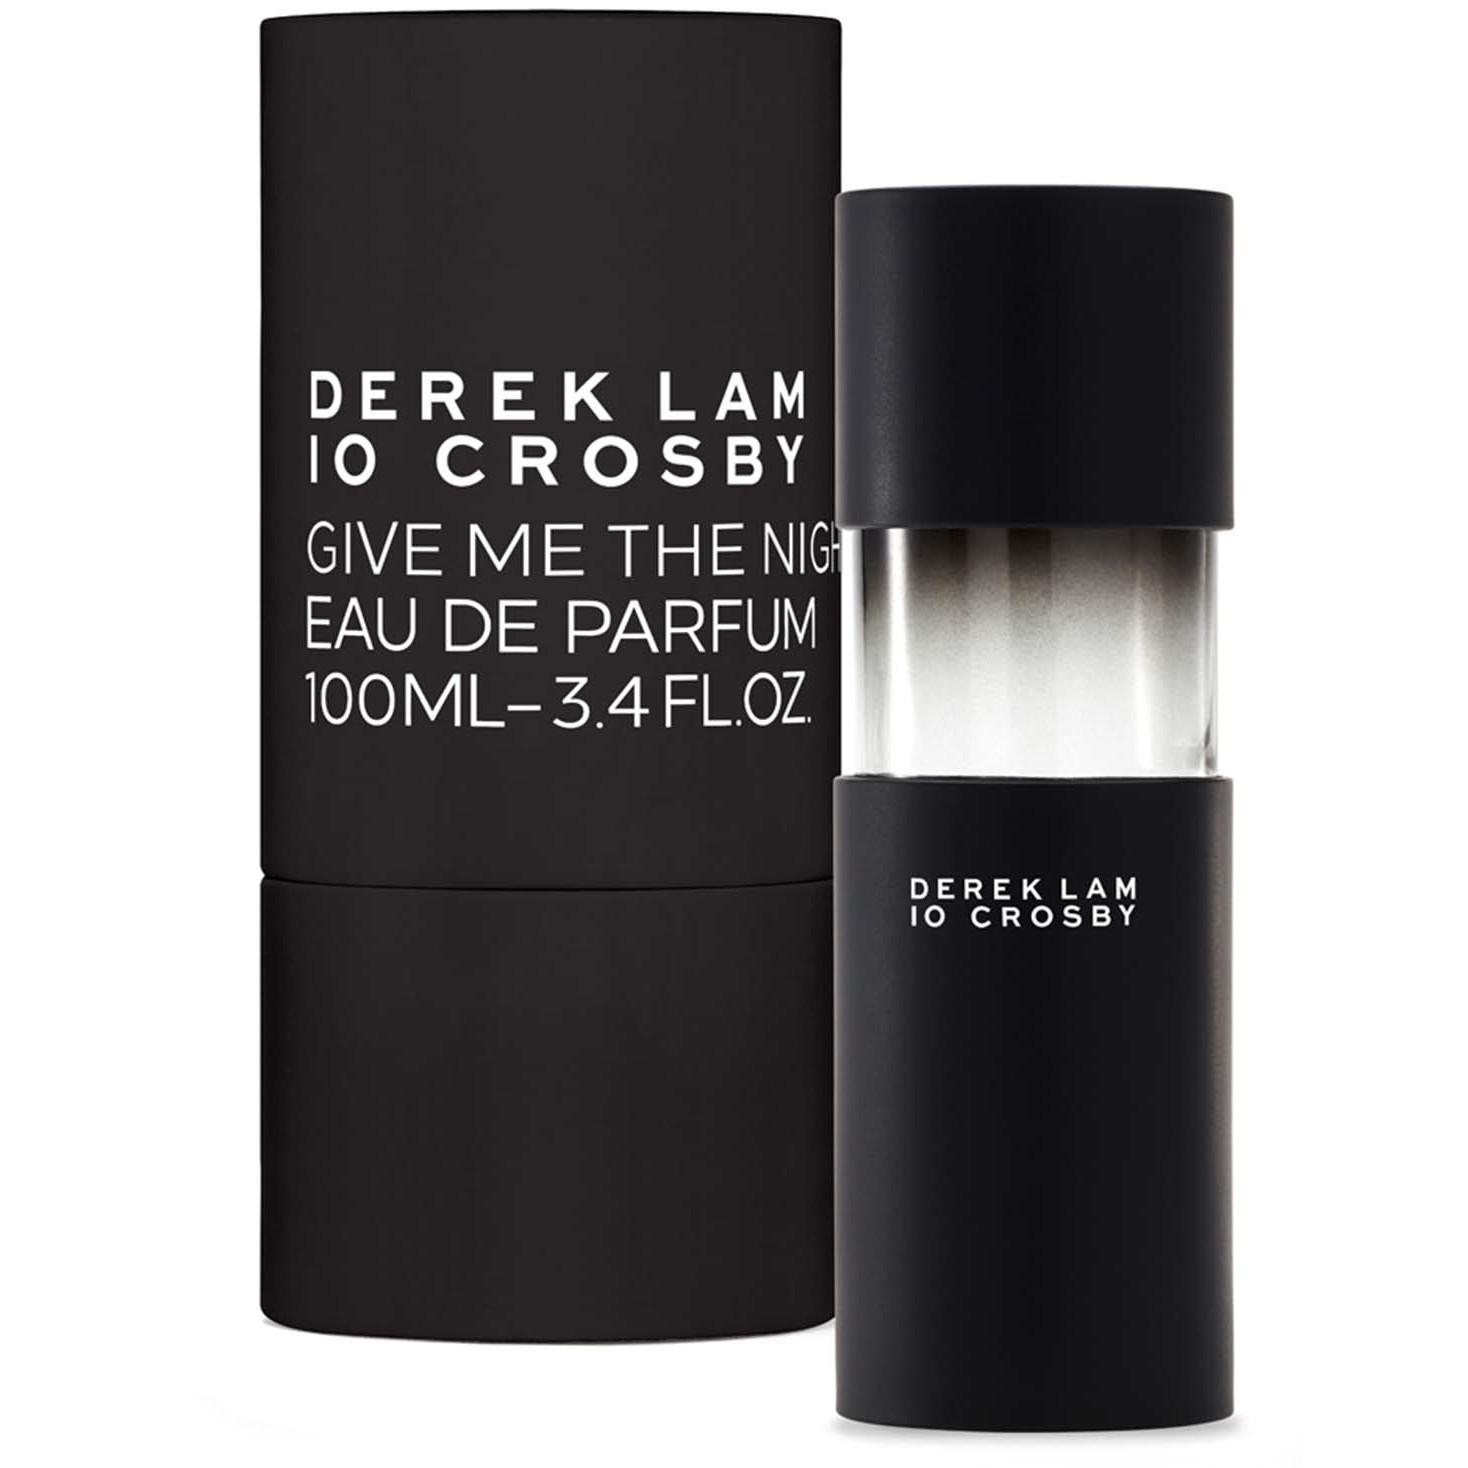 Läs mer om Derek Lam 10 Crosby Give Me The Night Eau de Parfum 100 ml